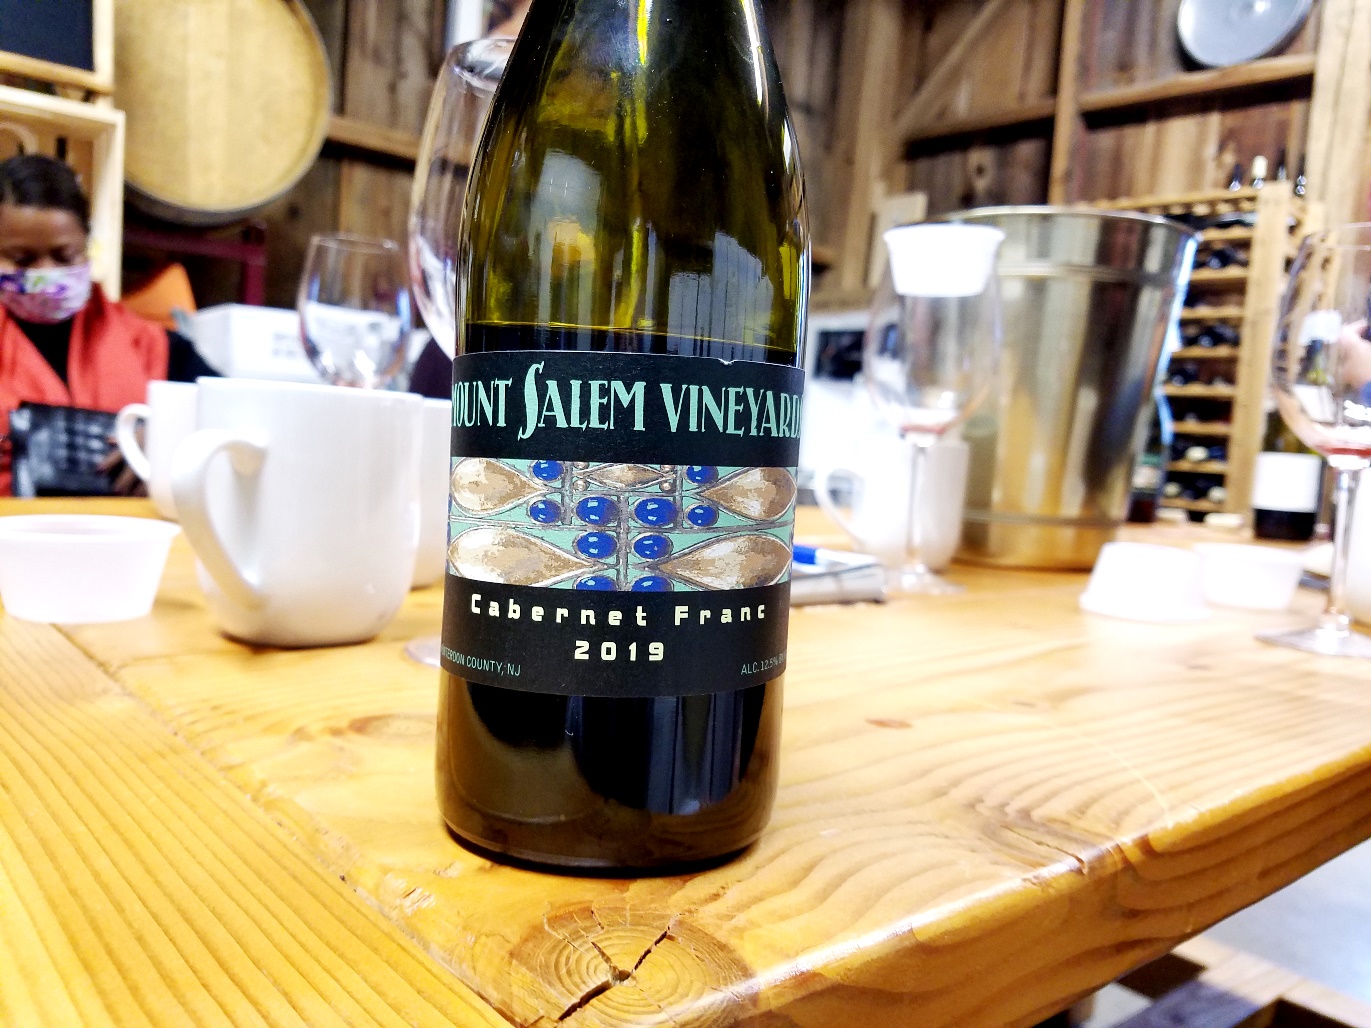 Mount Salem Vineyard, Cabernet Franc 2019, New Jersey, Wine Casual